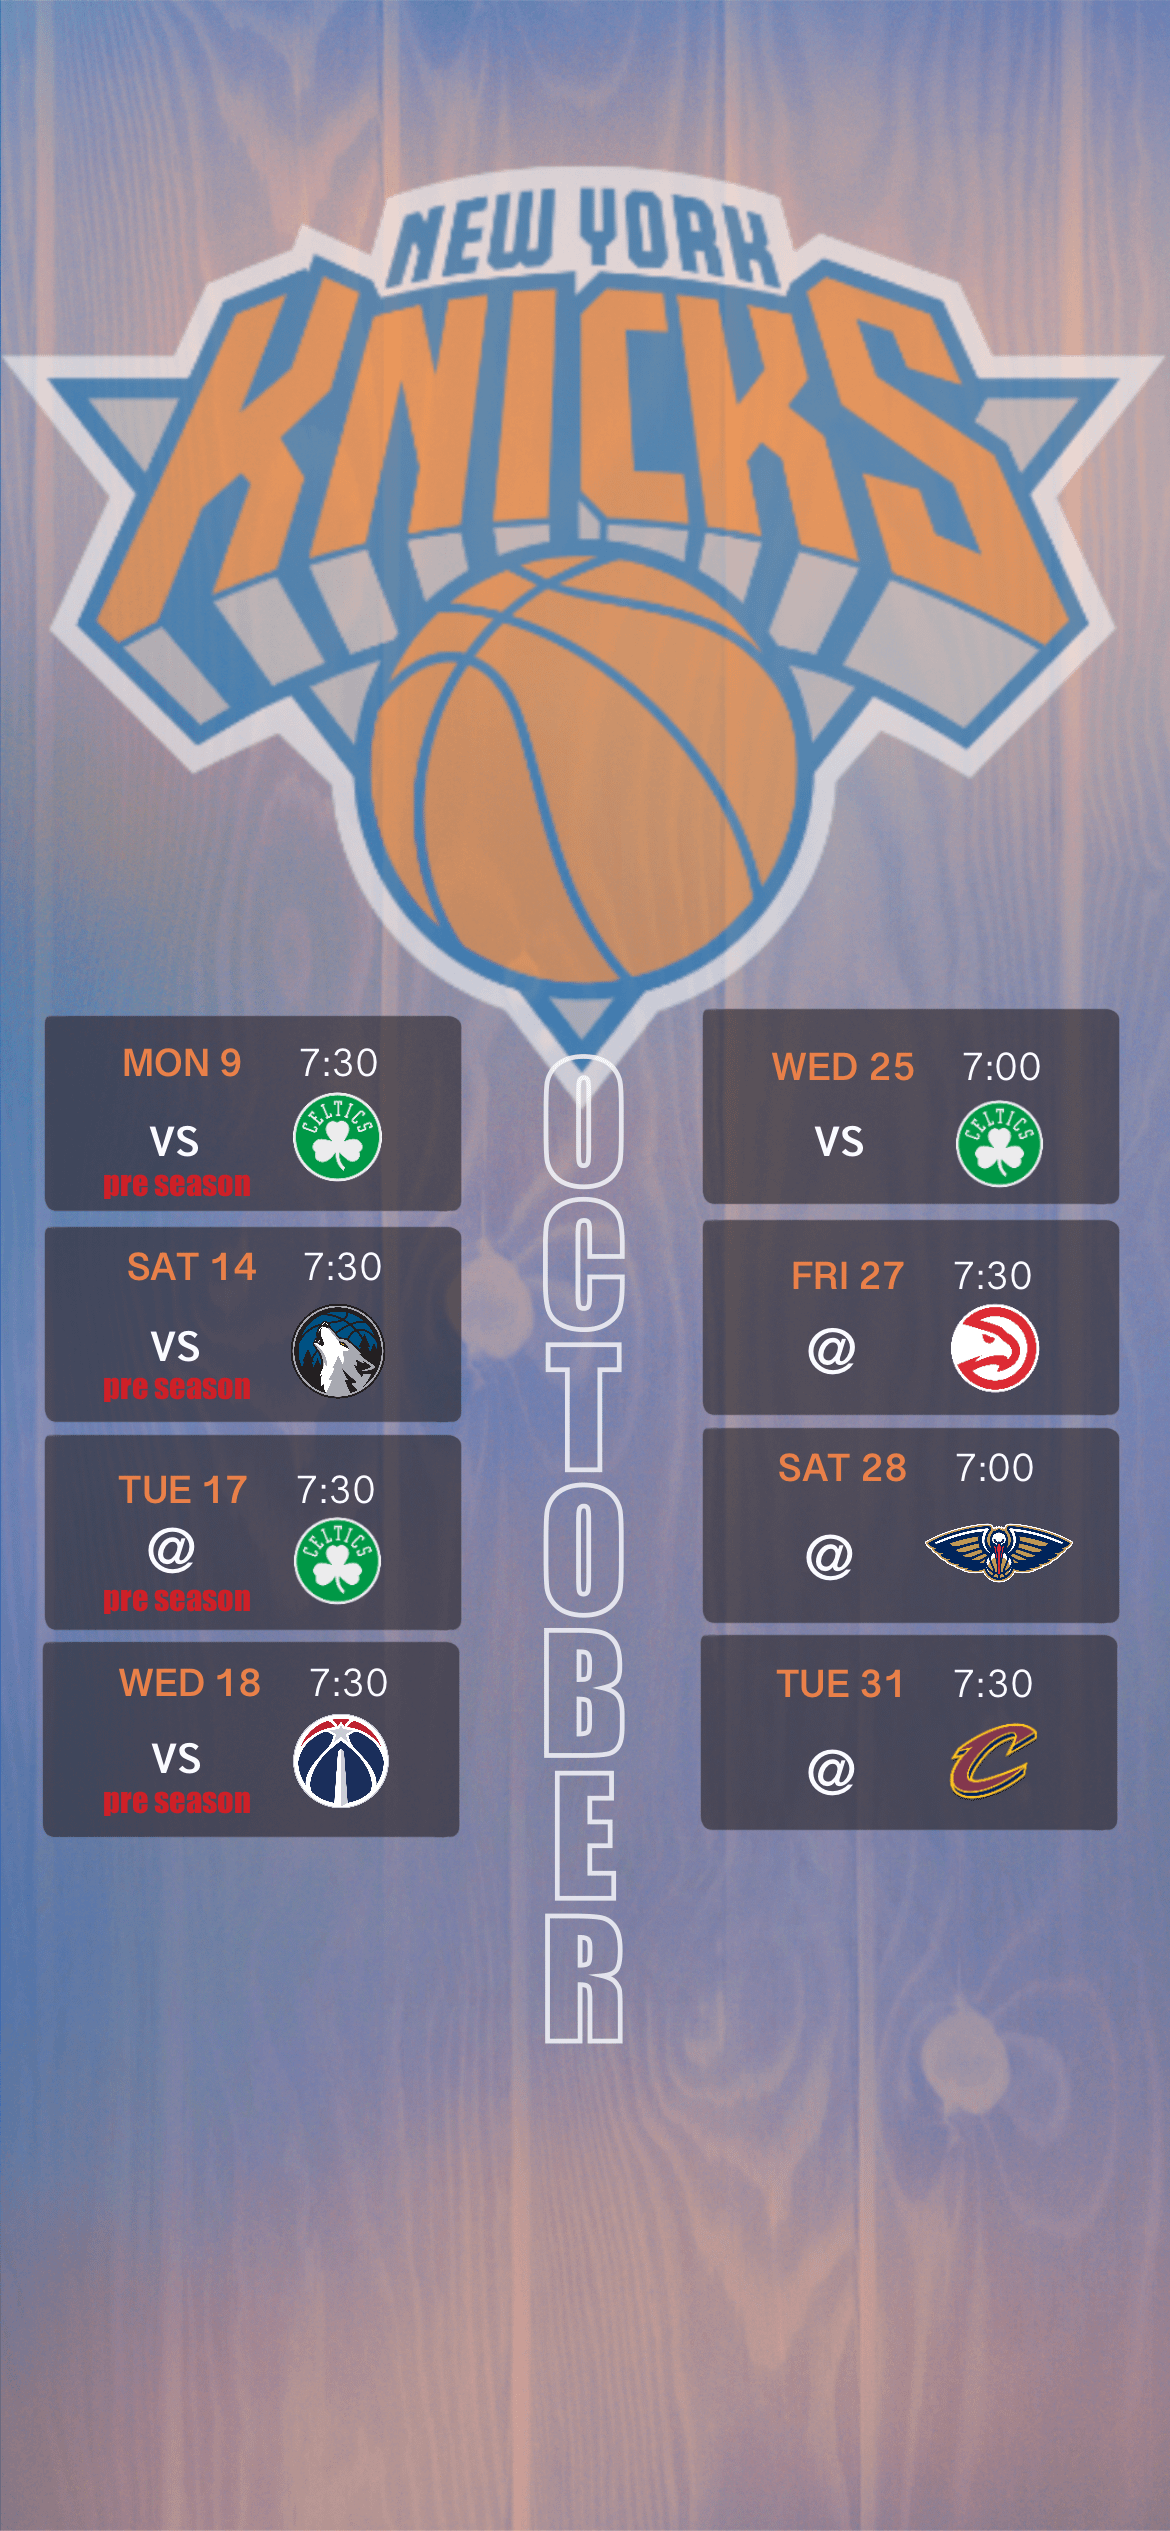 Knicks Season Schedule Wallpaper For iPhone R Nyknicks